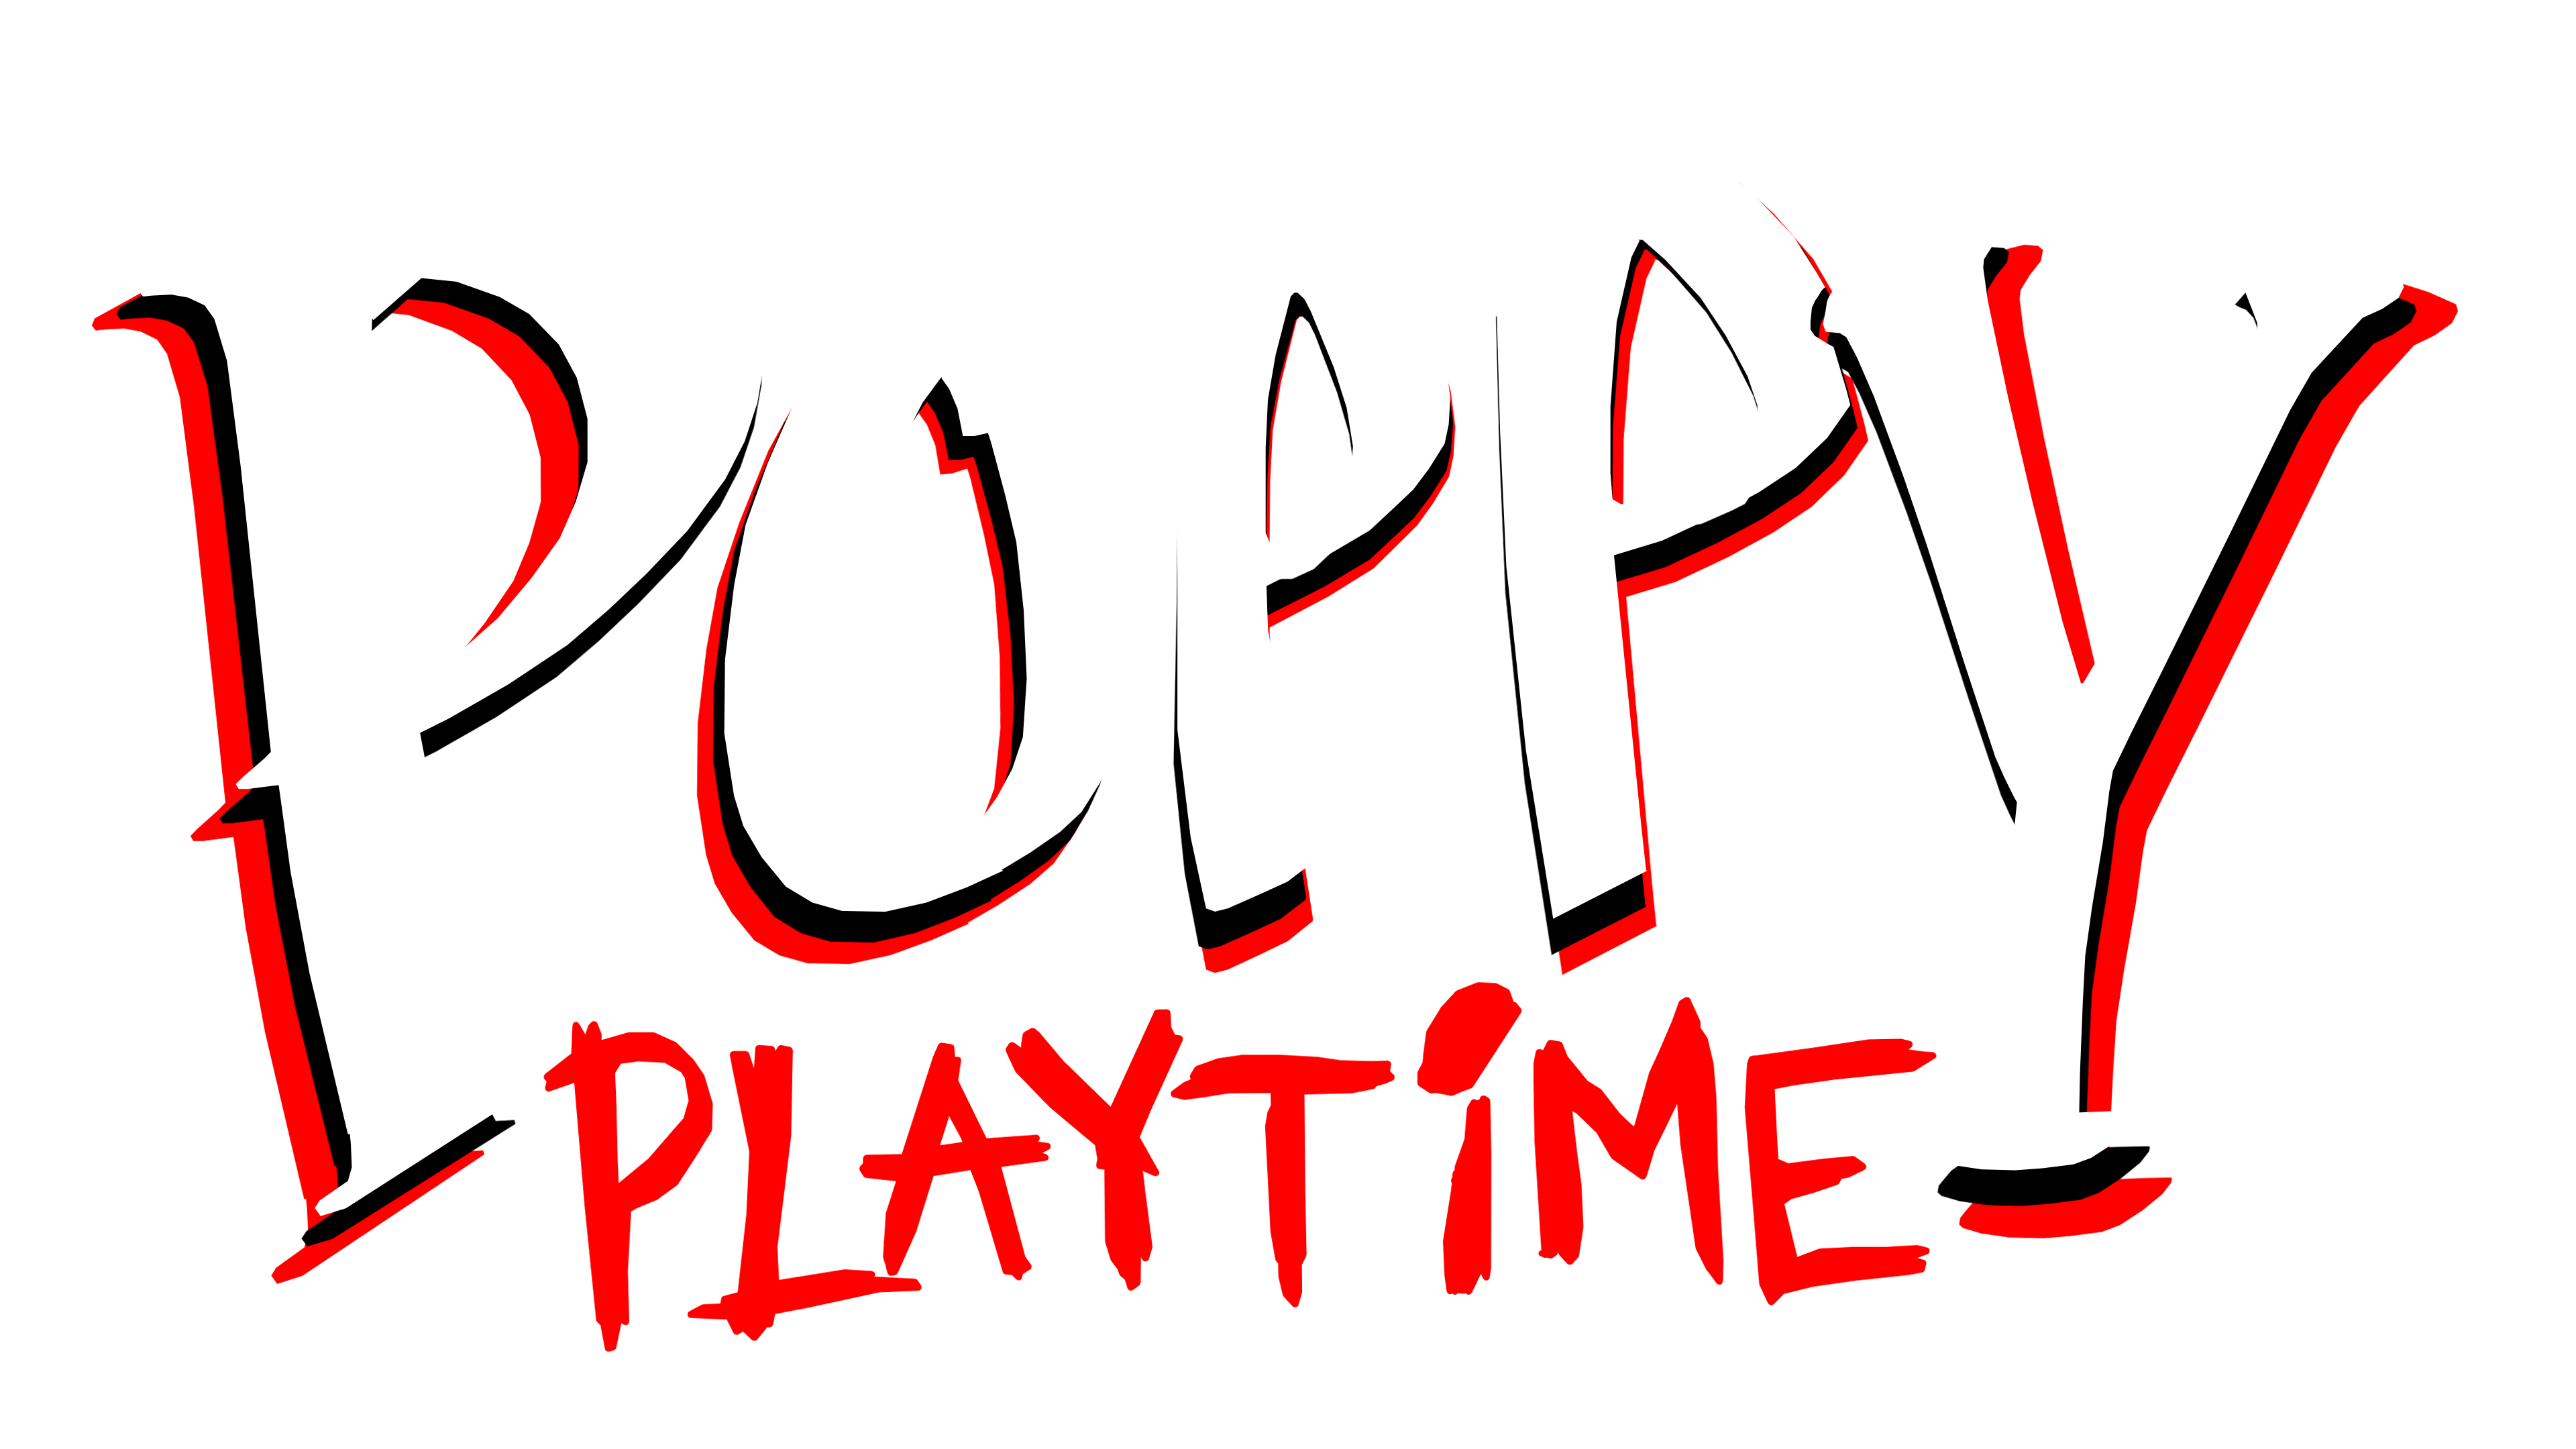 Poppy Playtime Chapter 2 Official Trailer, Poppy Playtime Wiki